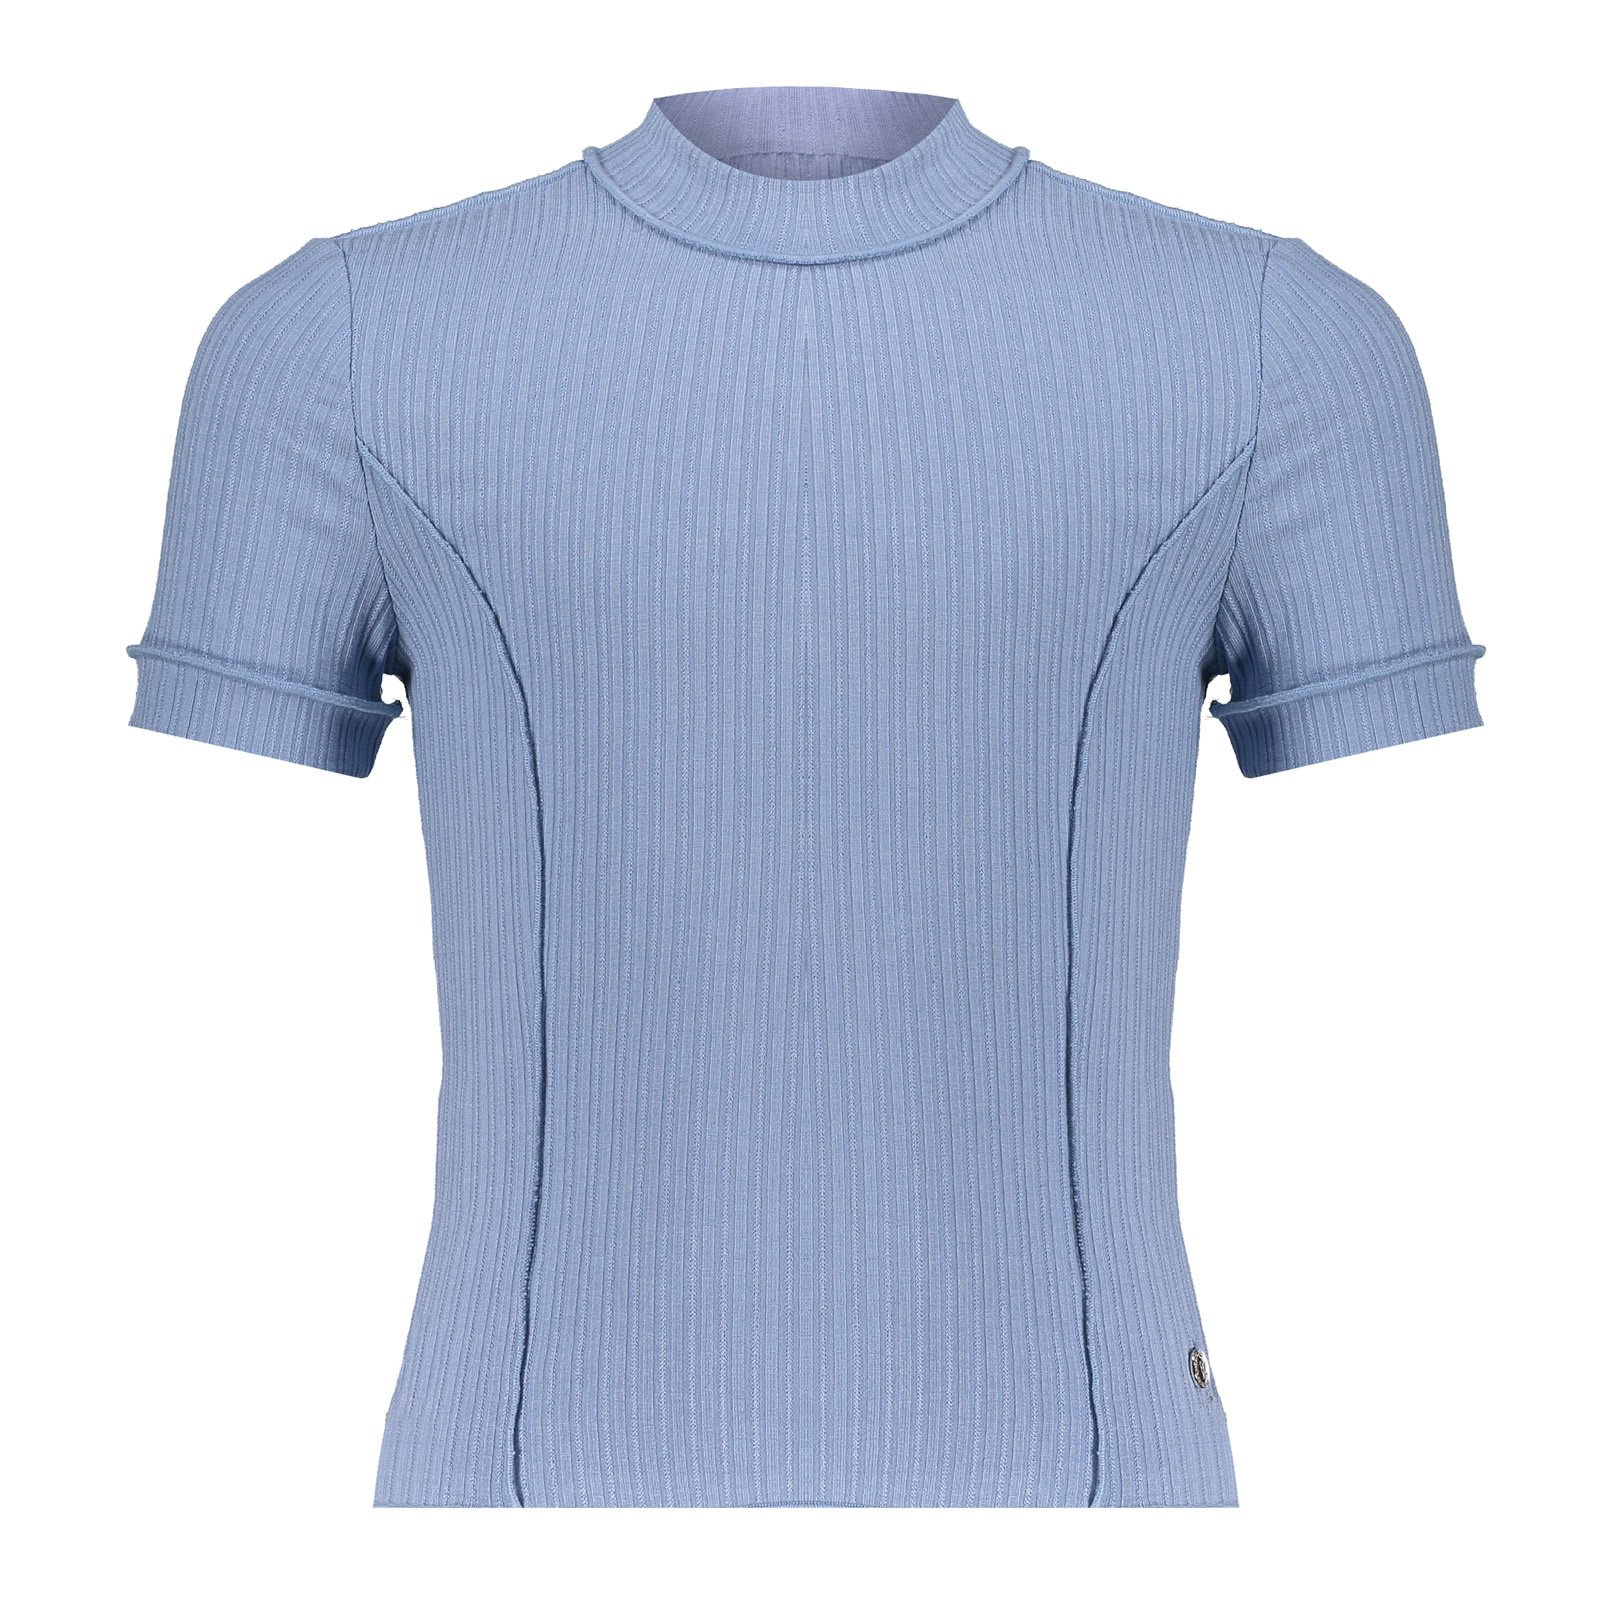 Meisjes t-shirt - Hesper - Denim blauw